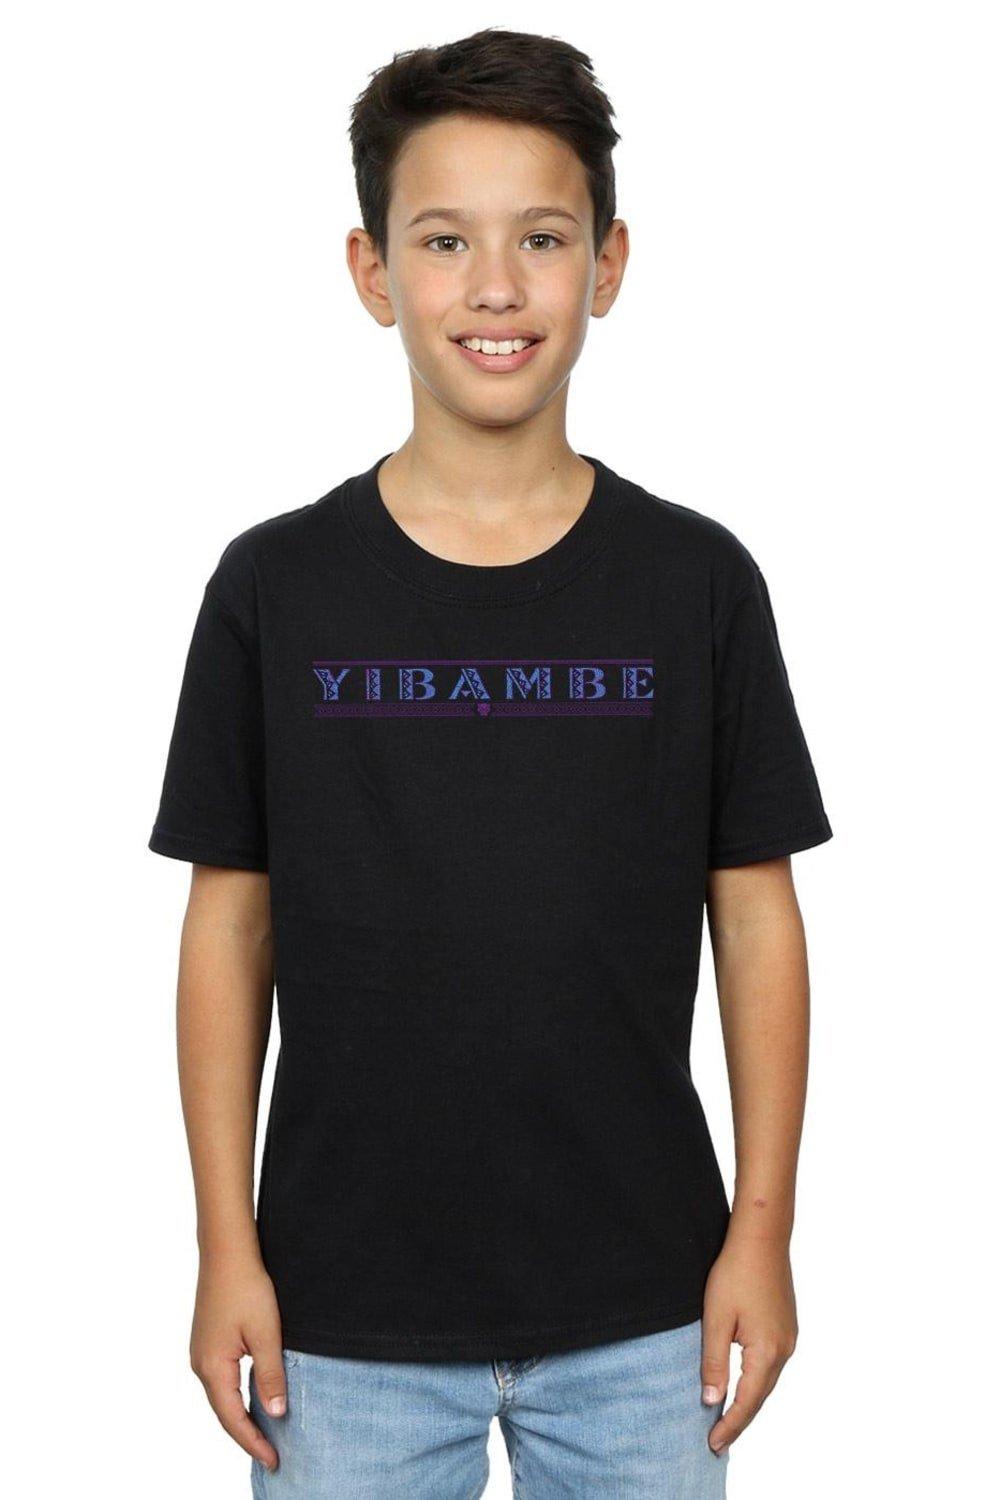 Avengers Endgame Yibambe T-Shirt